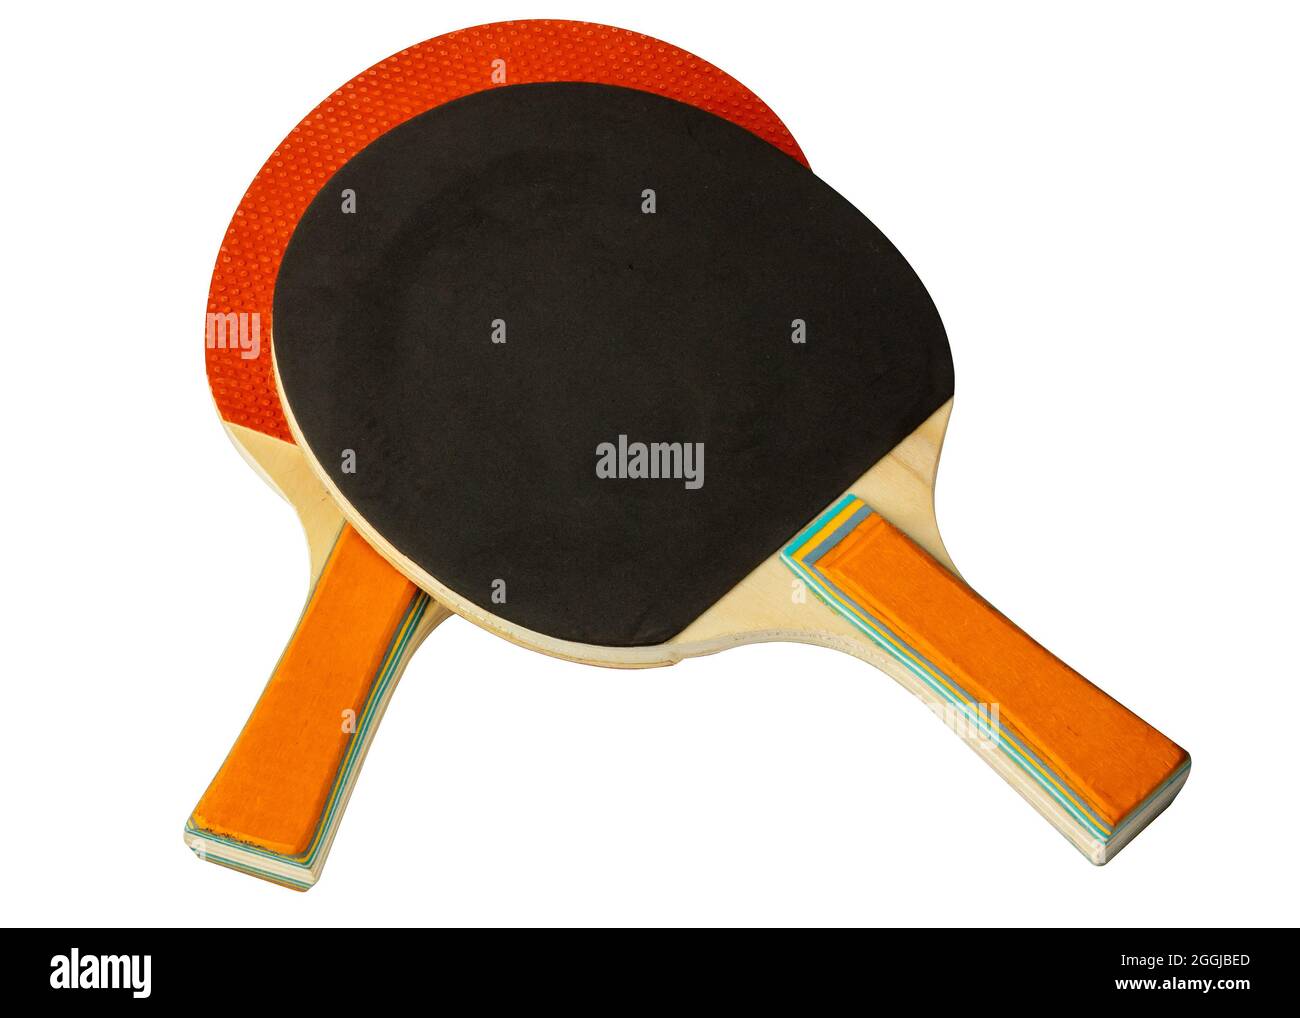 Ping pong rackets. Table tennis. Ping pong equipment Stock Photo